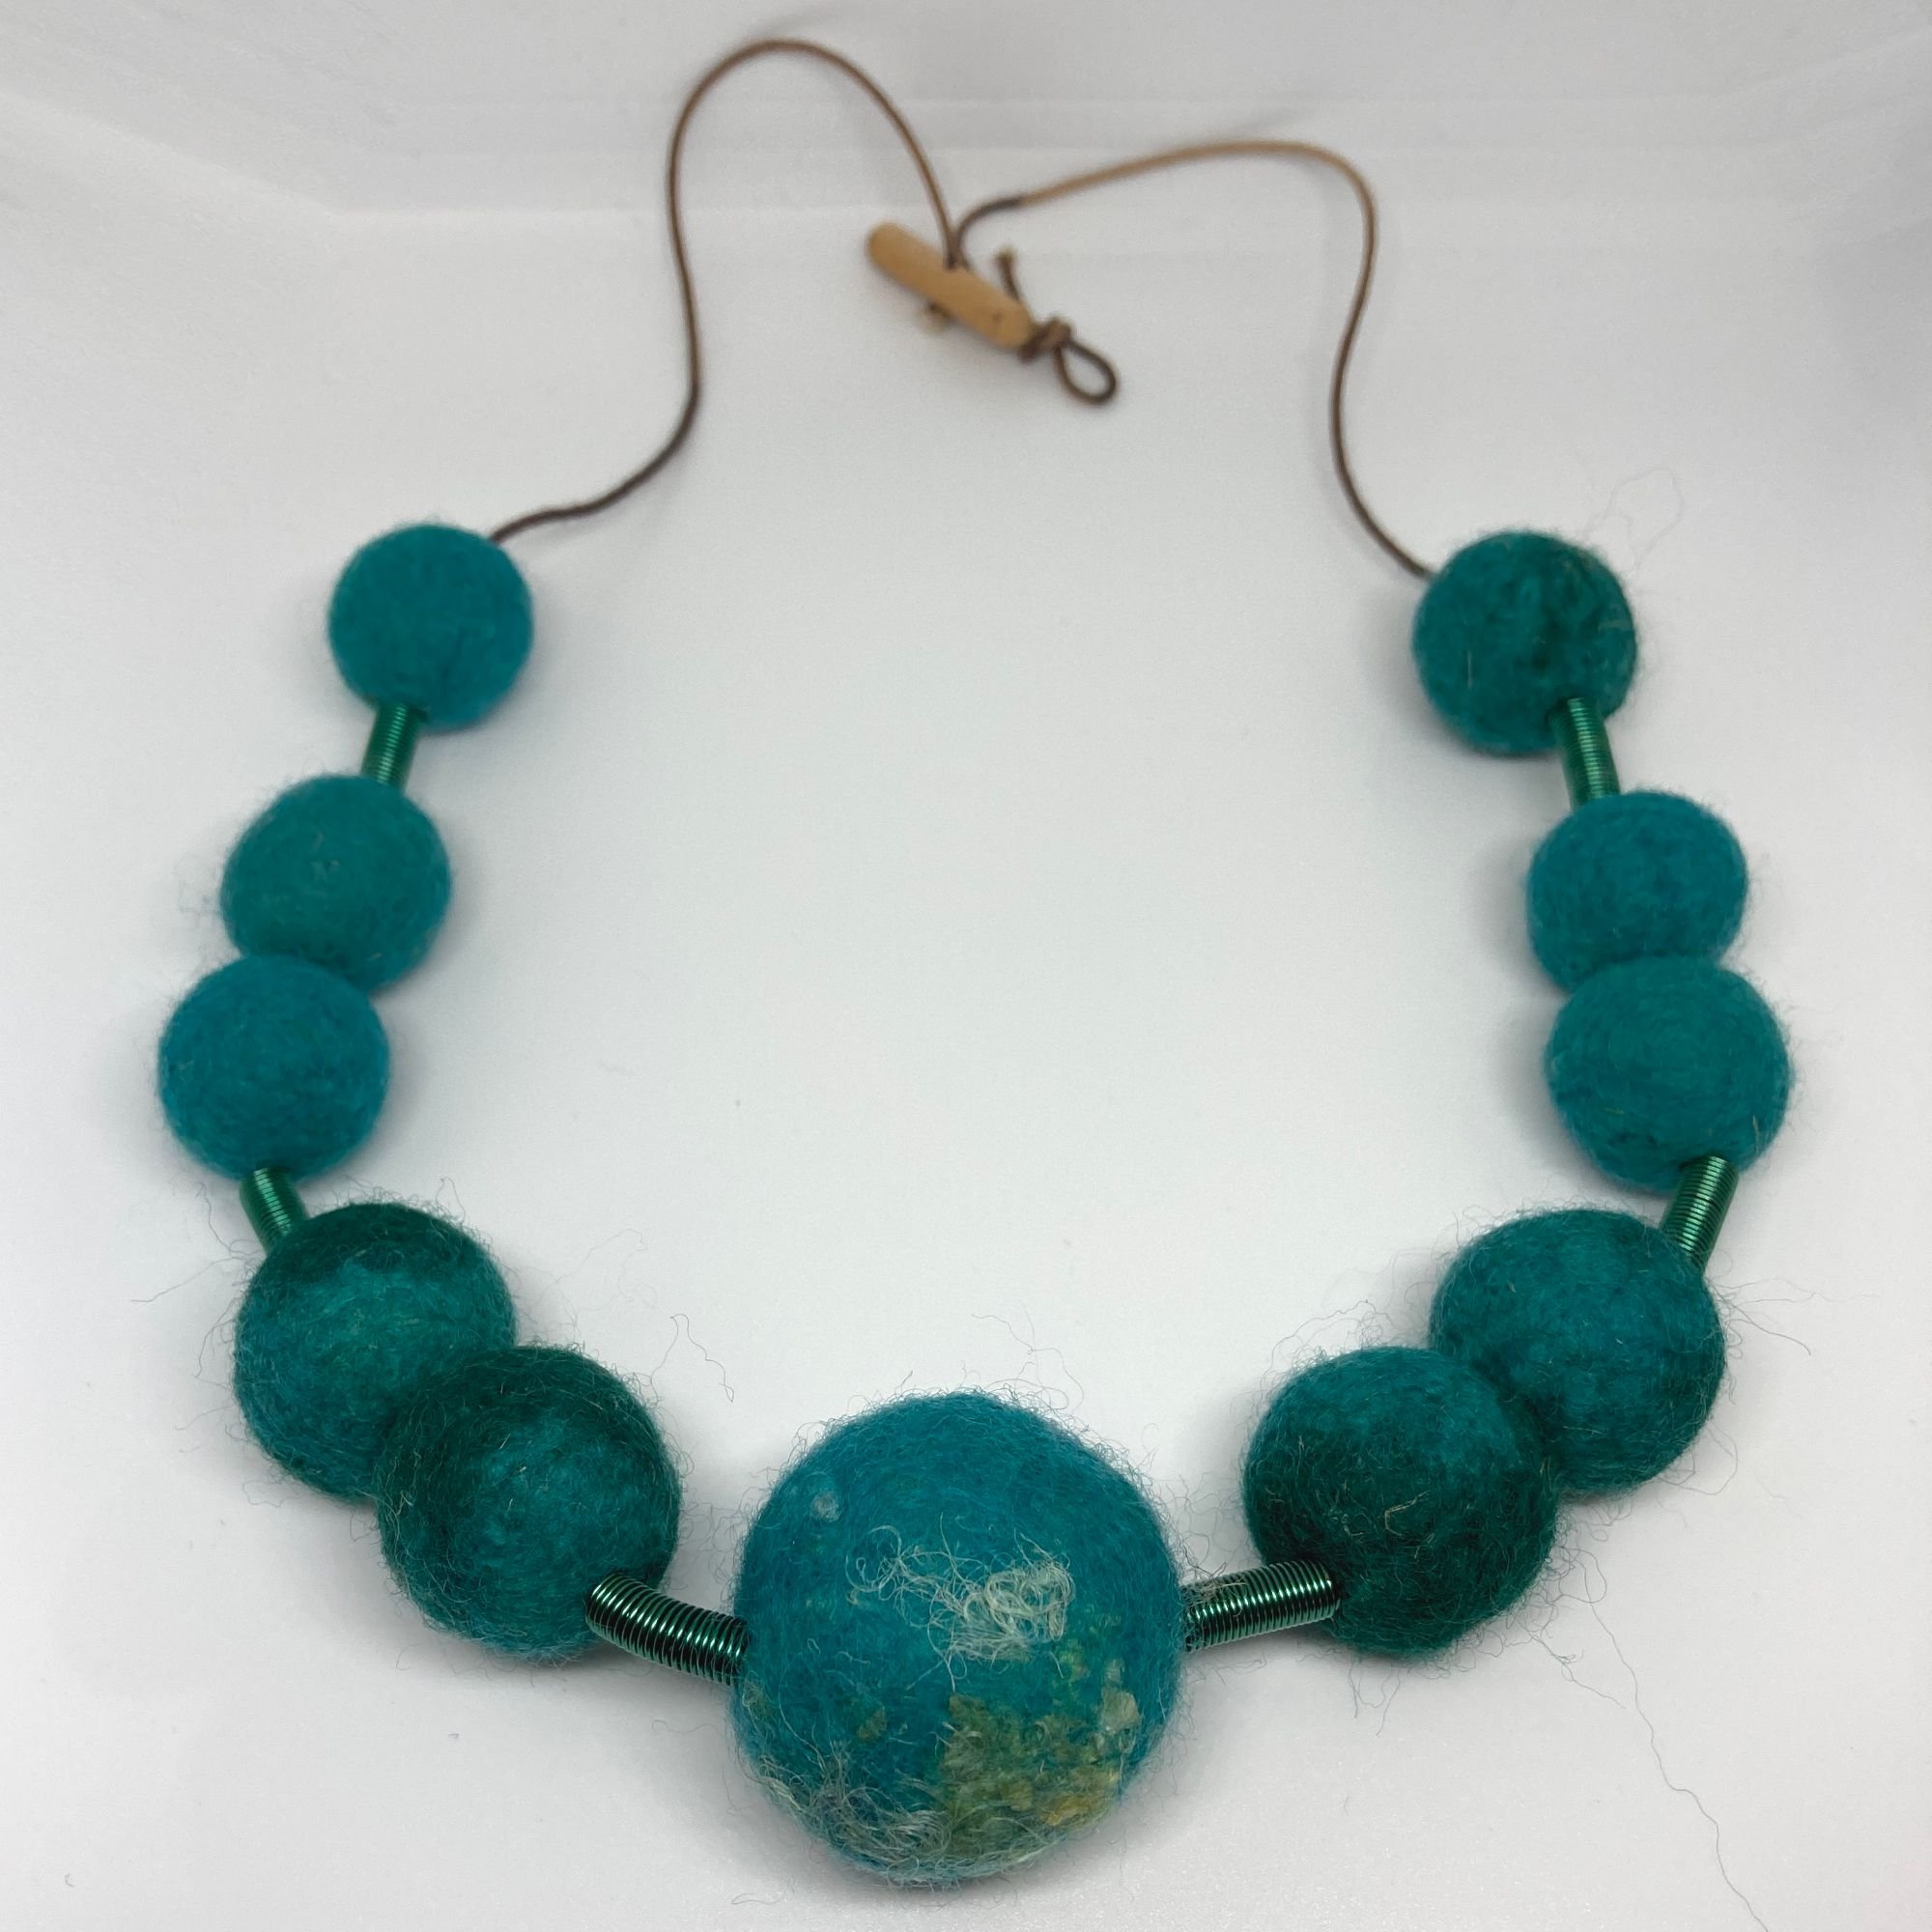 Felted Necklace Workshop - Turquoise